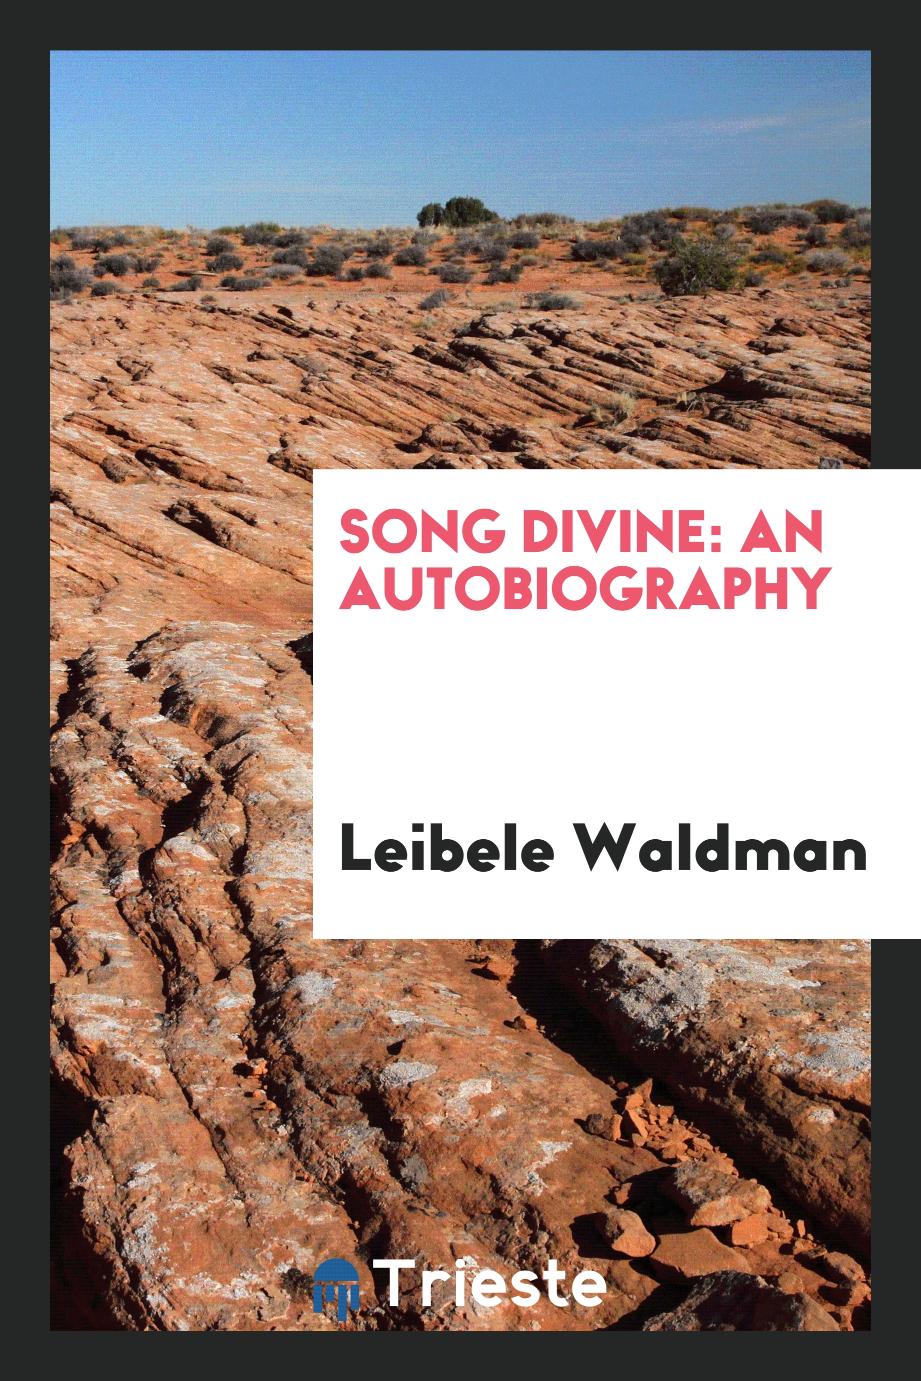 Leibele Waldman - Song divine: an autobiography